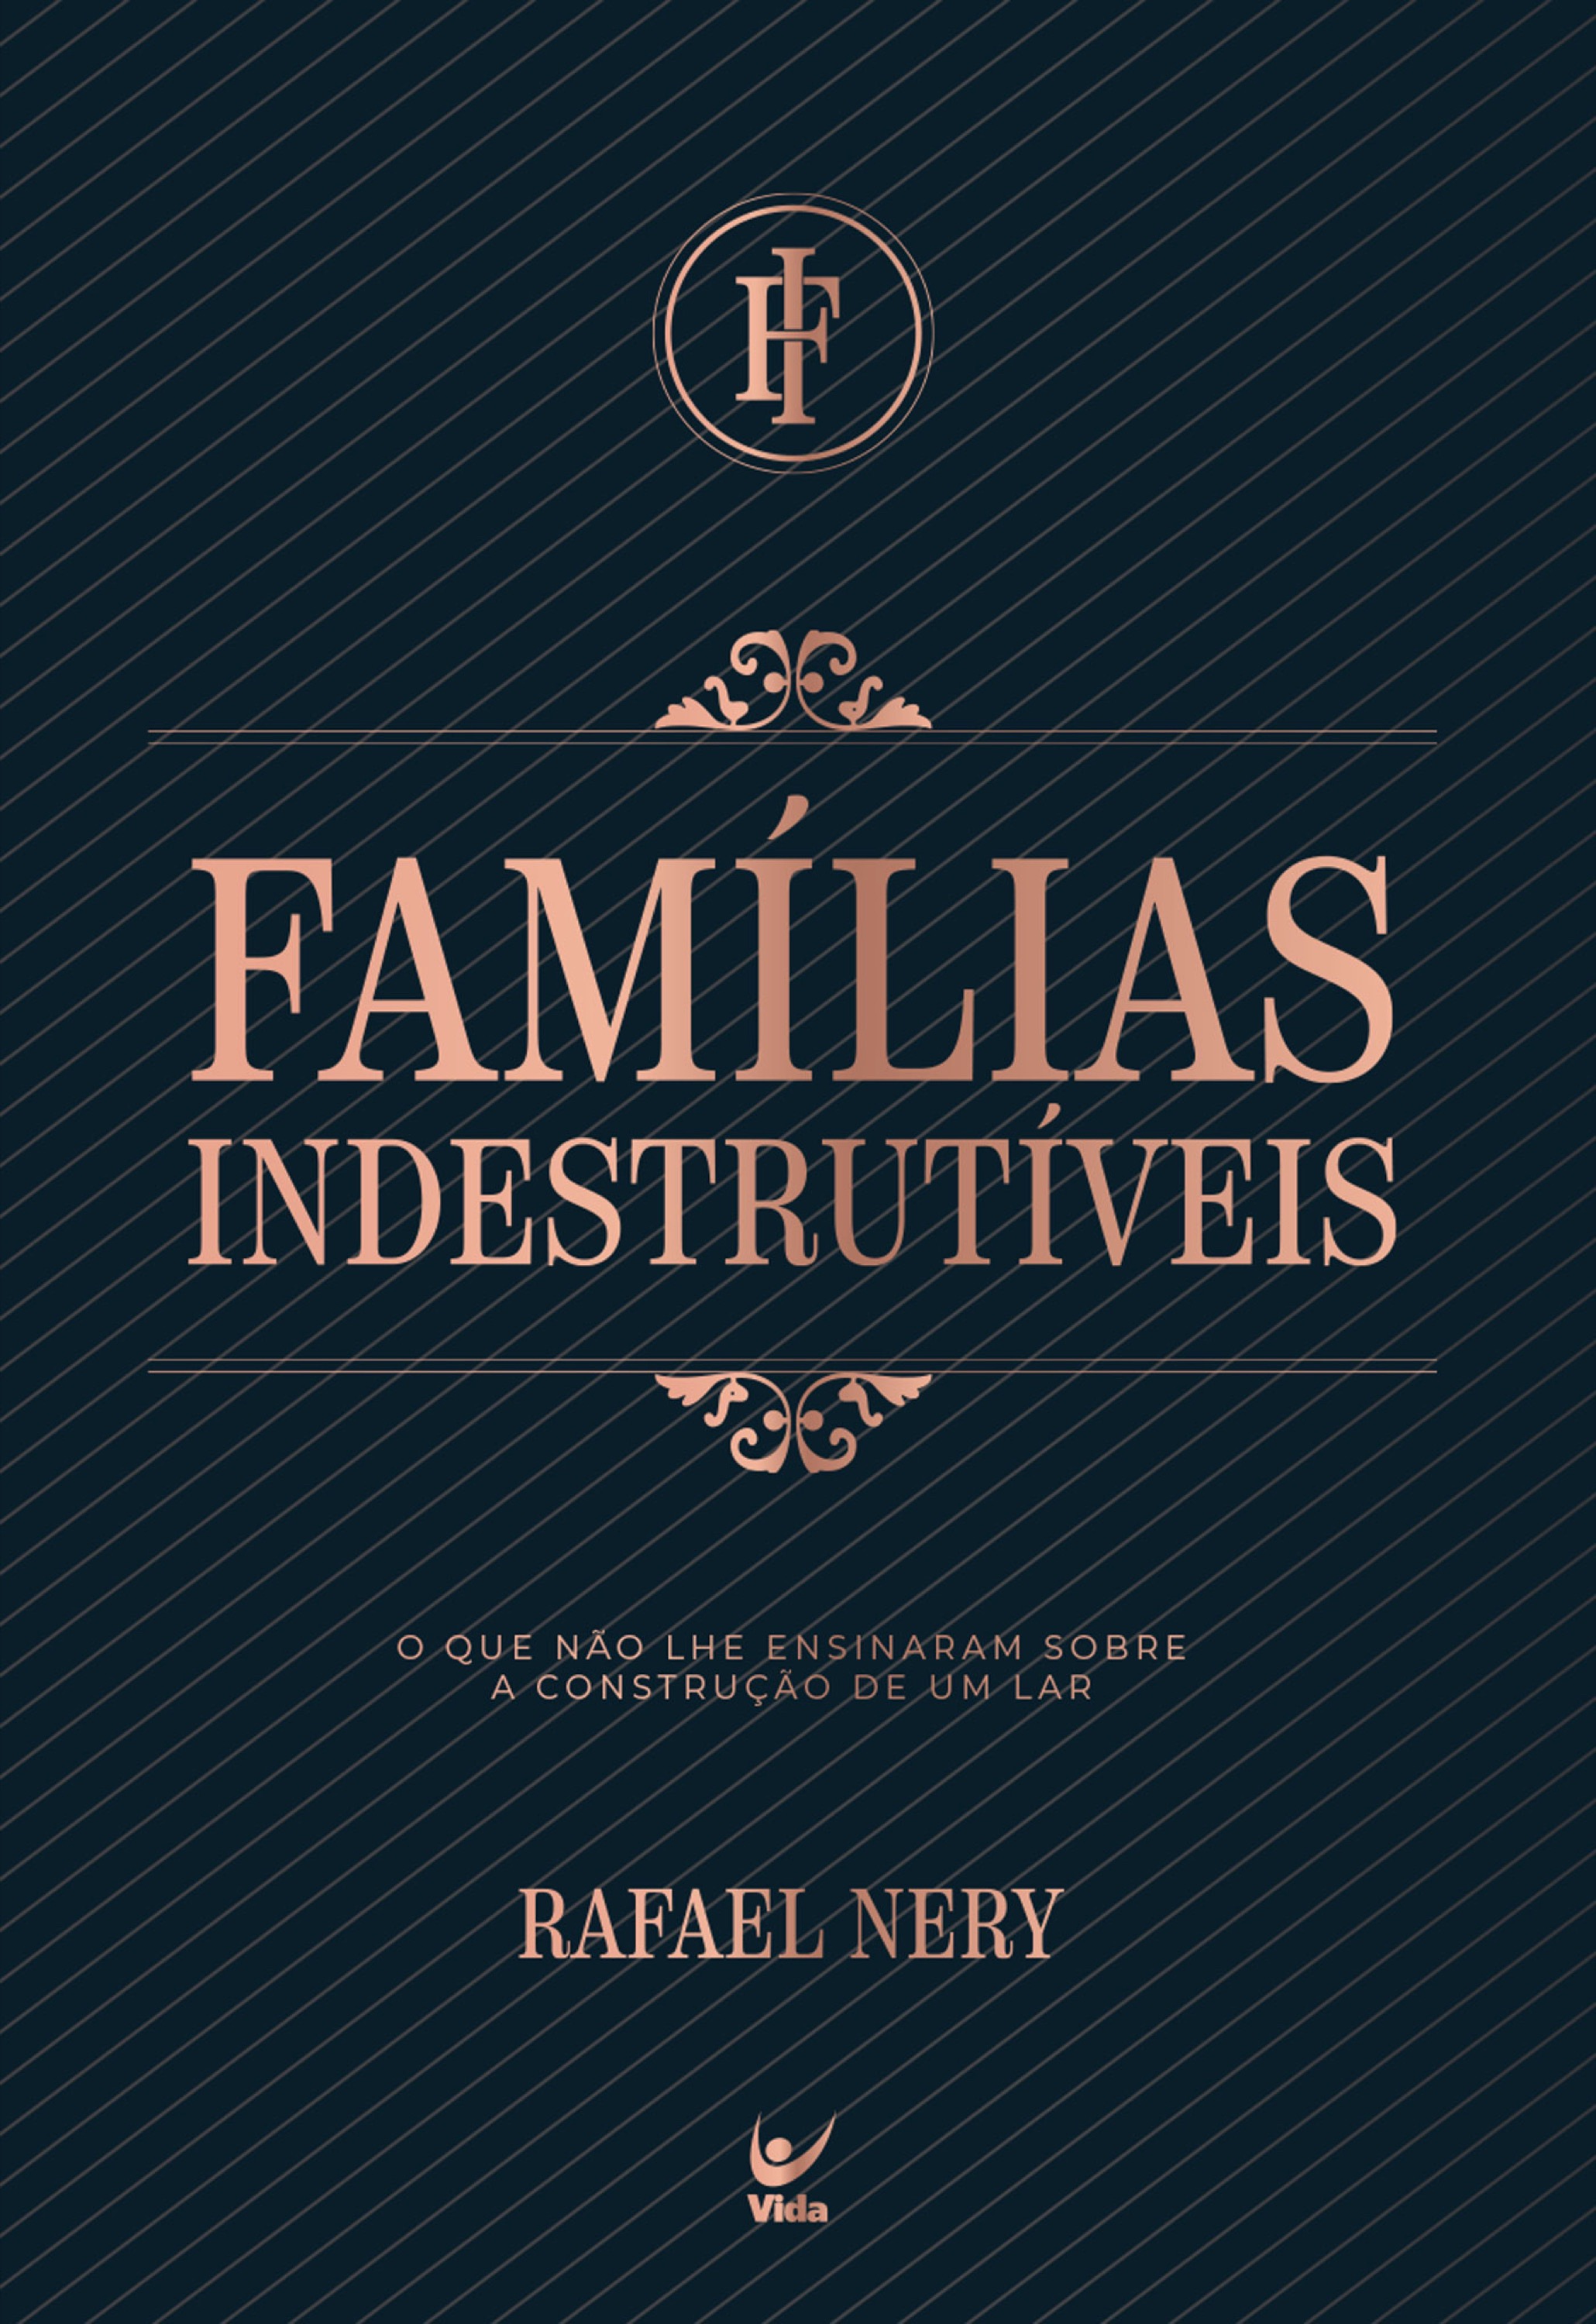 Famílias indestrutíveis